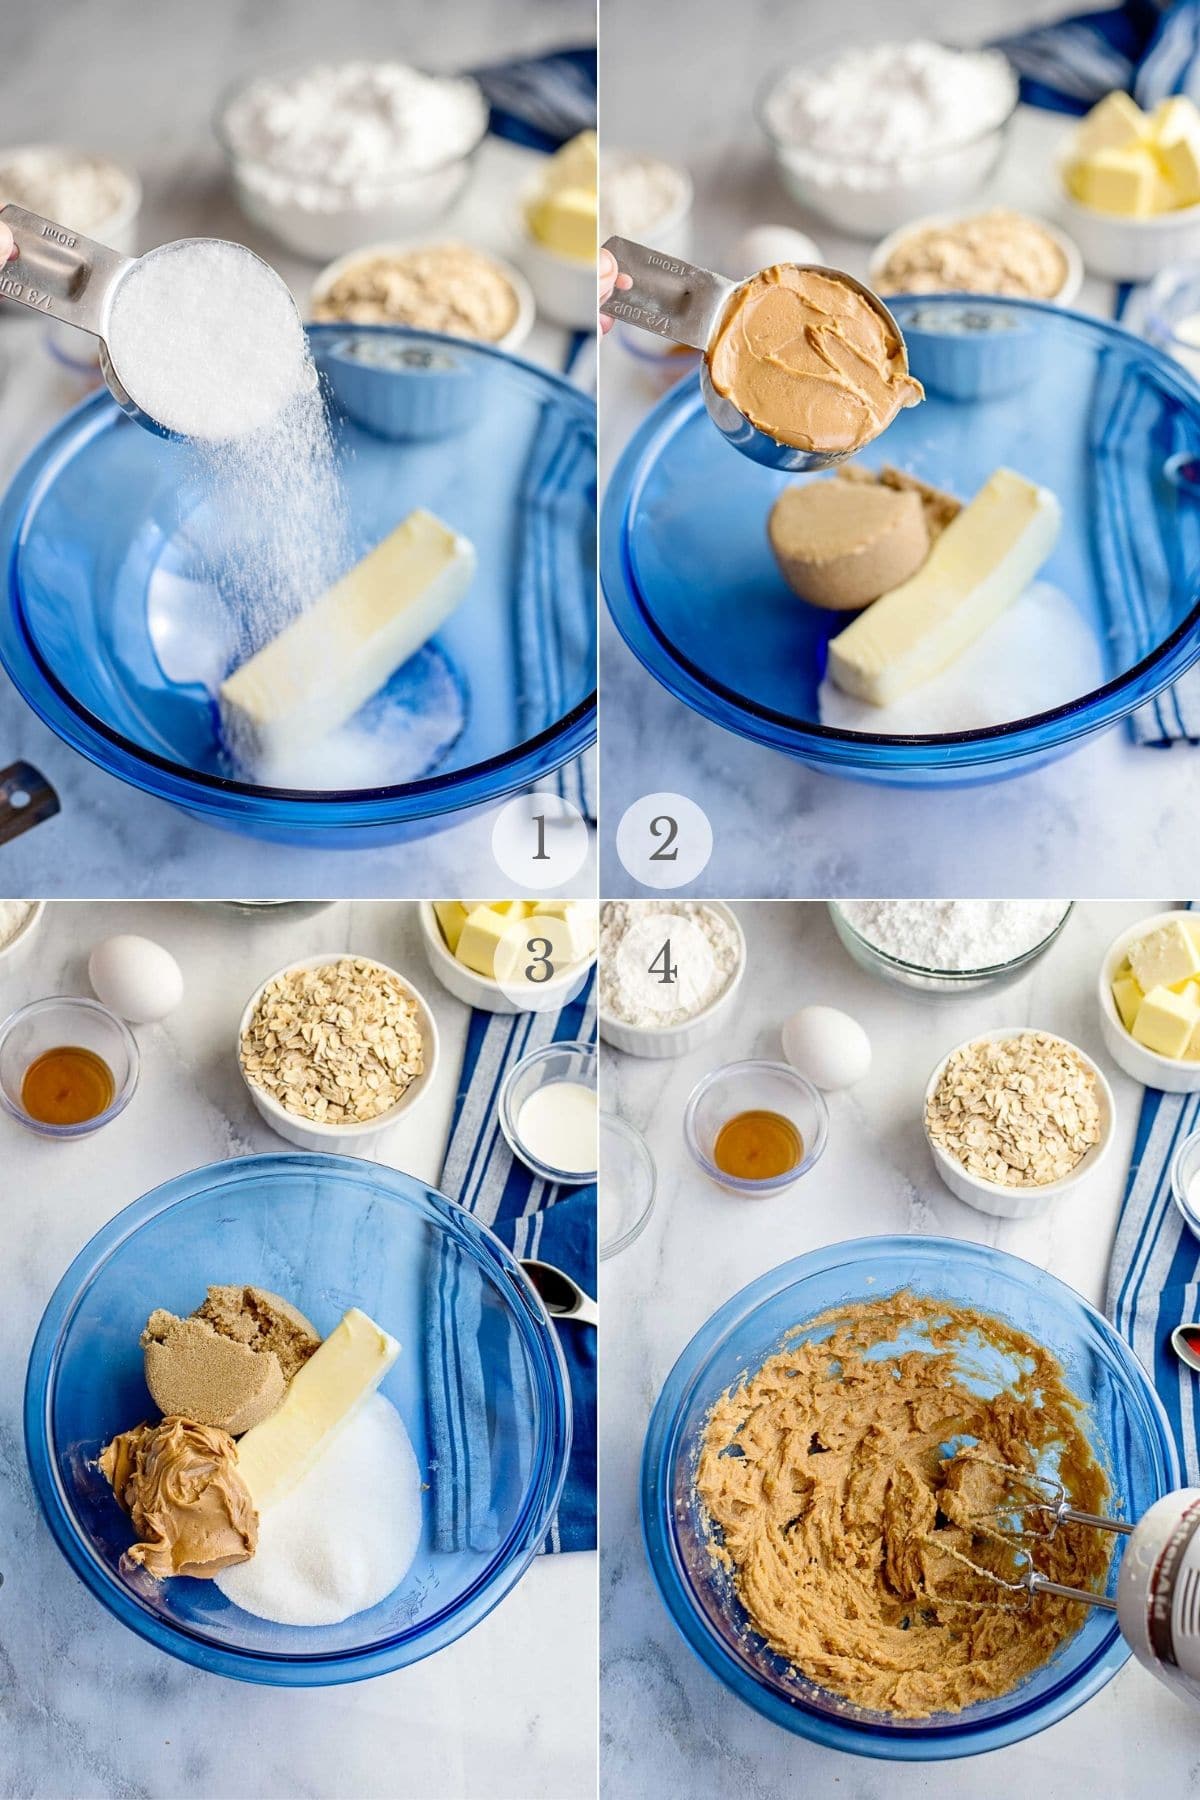 peanut butter oatmeal cookies recipe steps 1-4